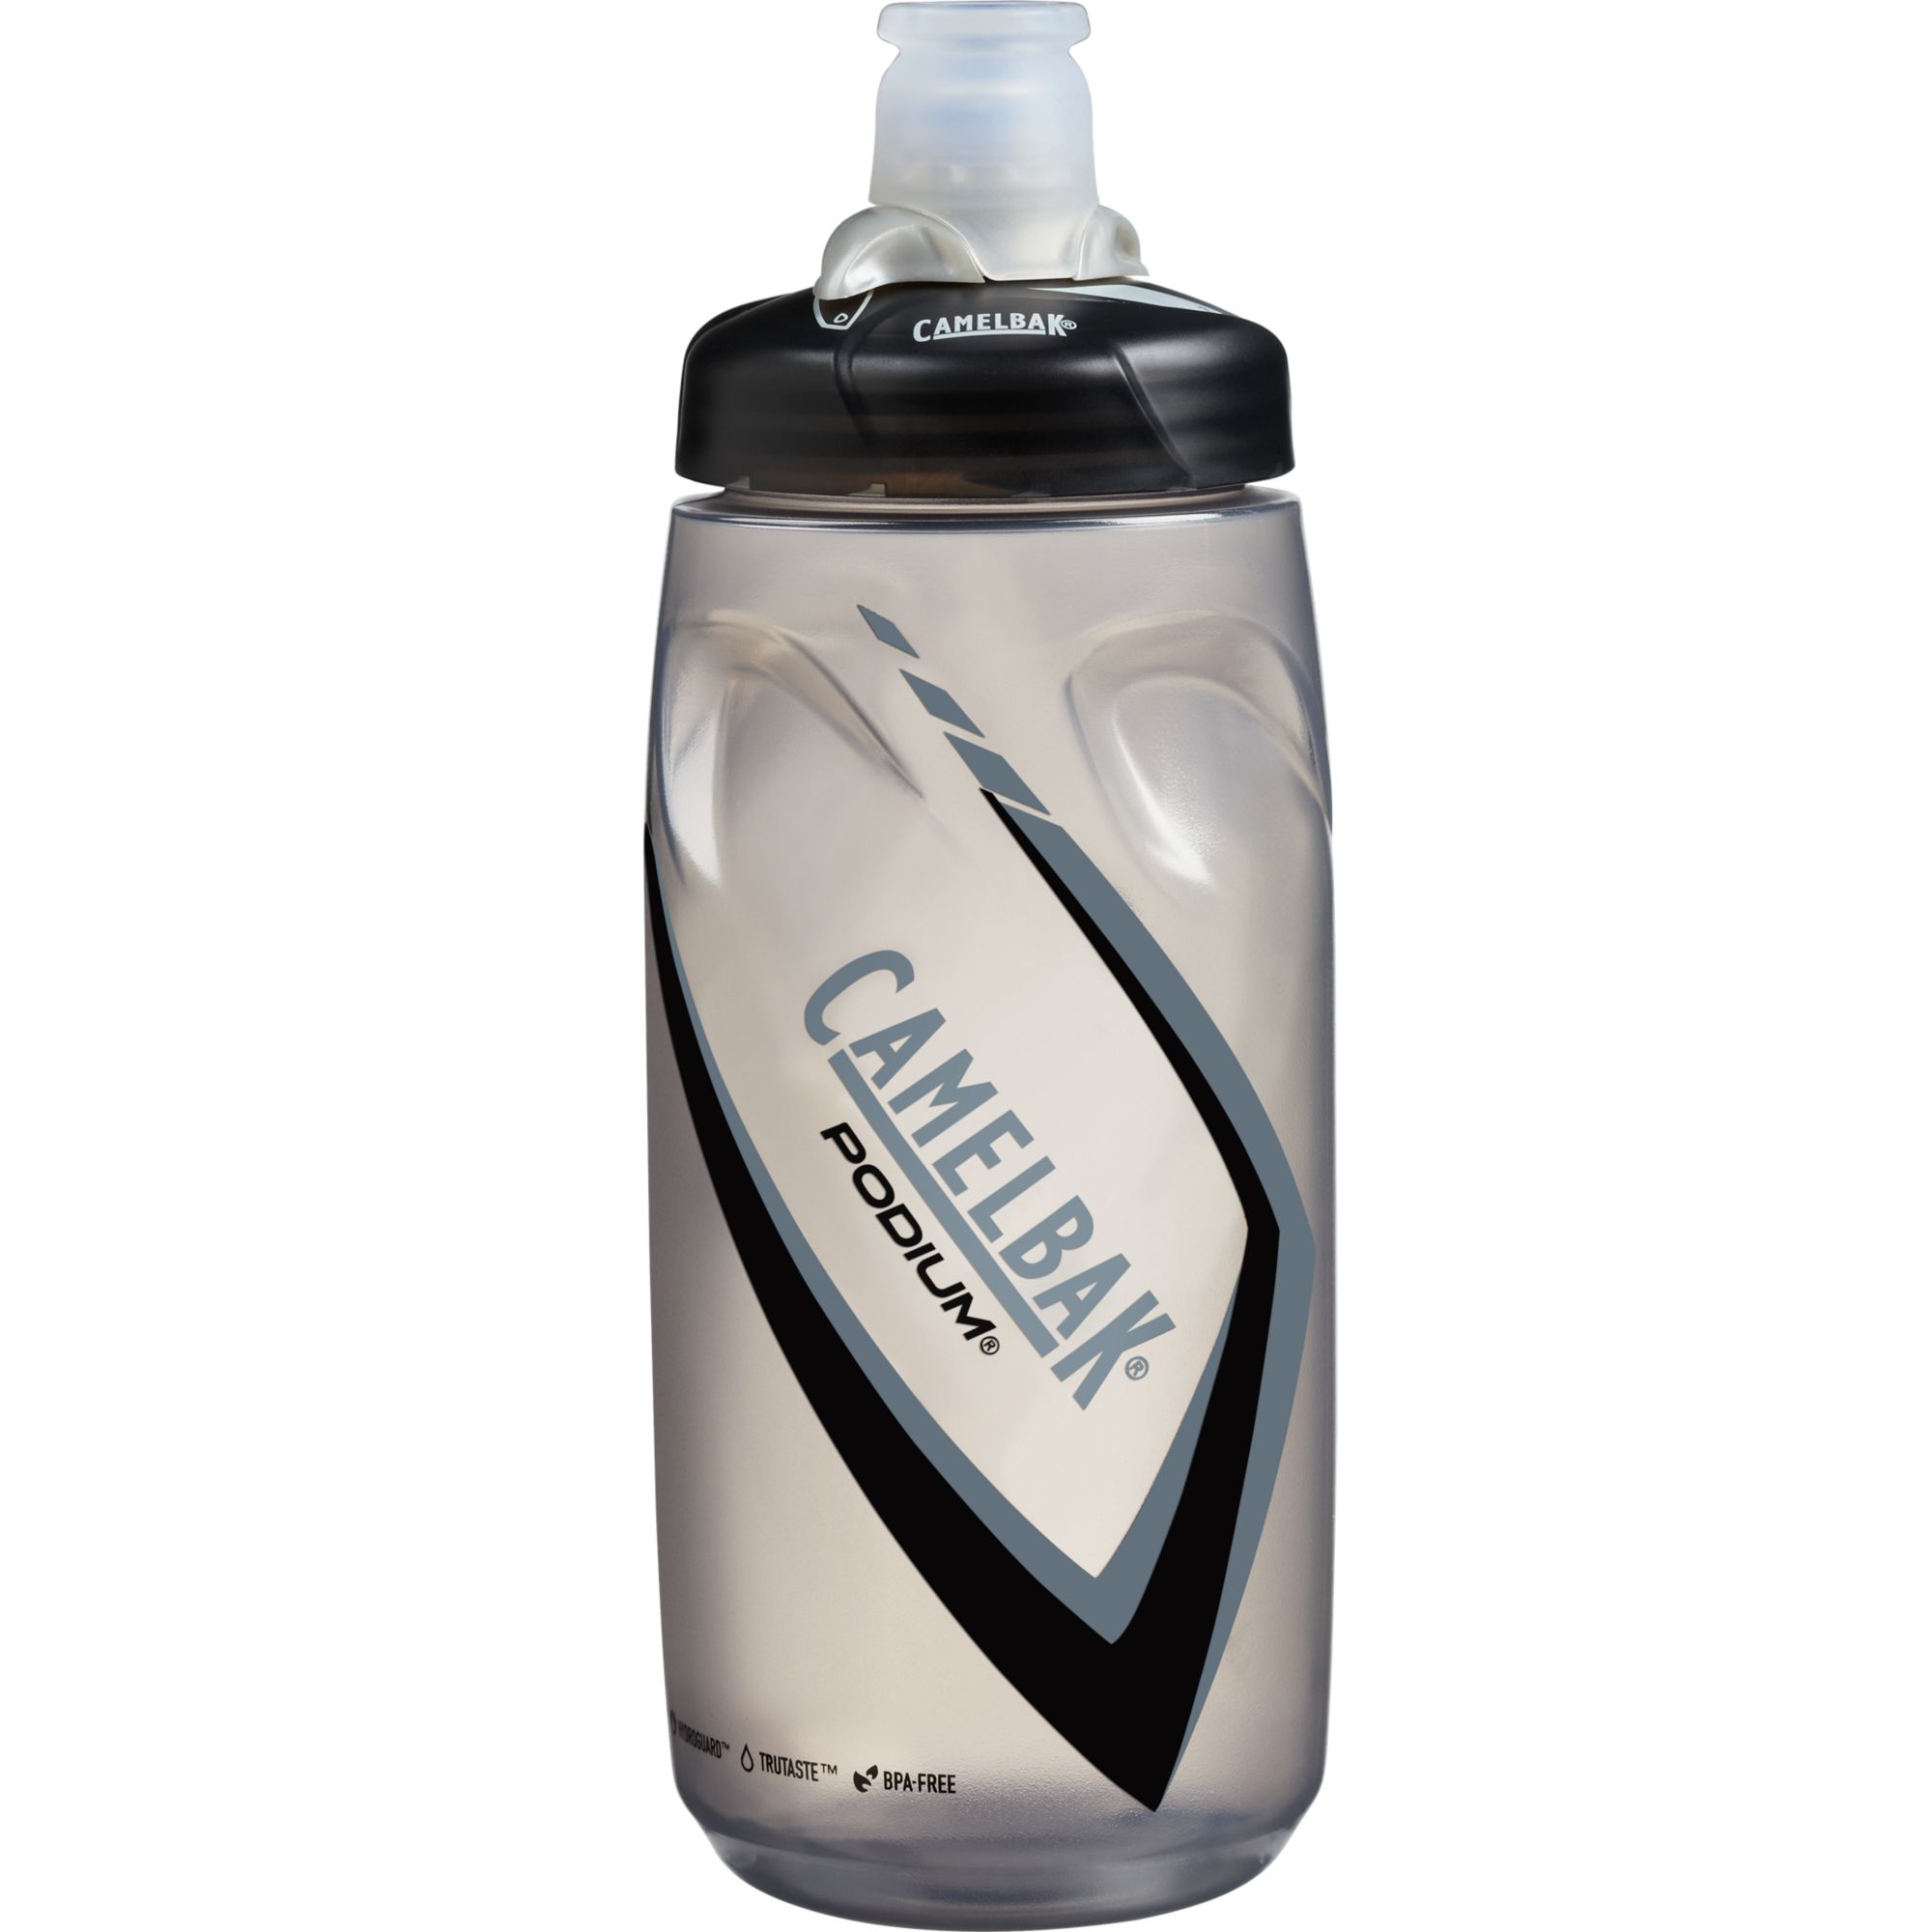 CamelBak Water Bottle Accessories